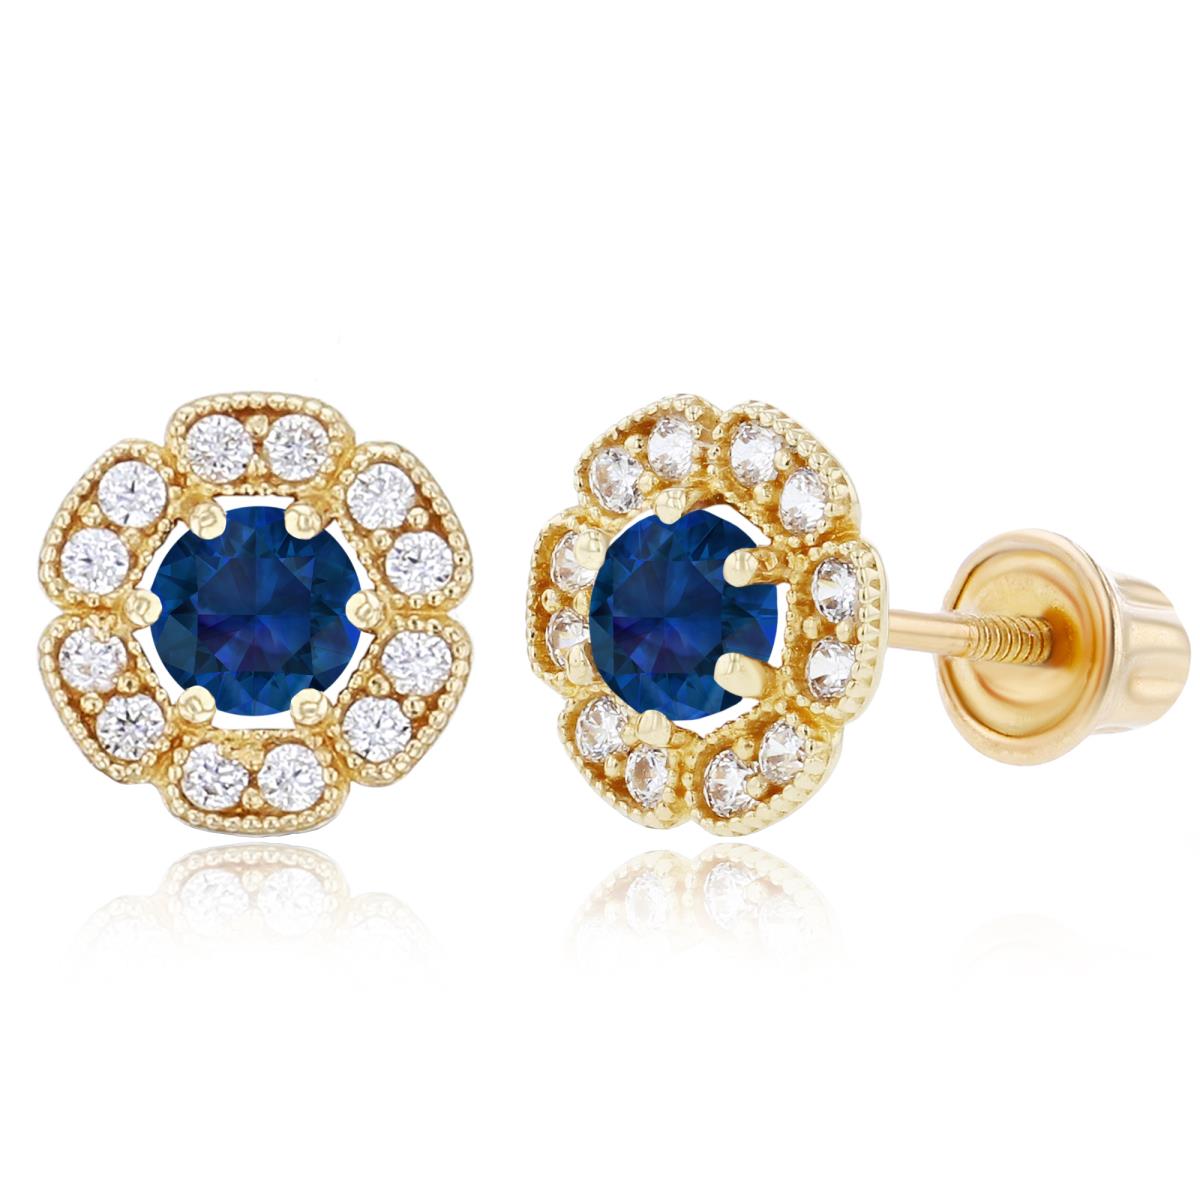 14K Yellow Gold 3mm Created Blue Sapphire & 1mm Created White Sapphire Flower Screwback Earrings